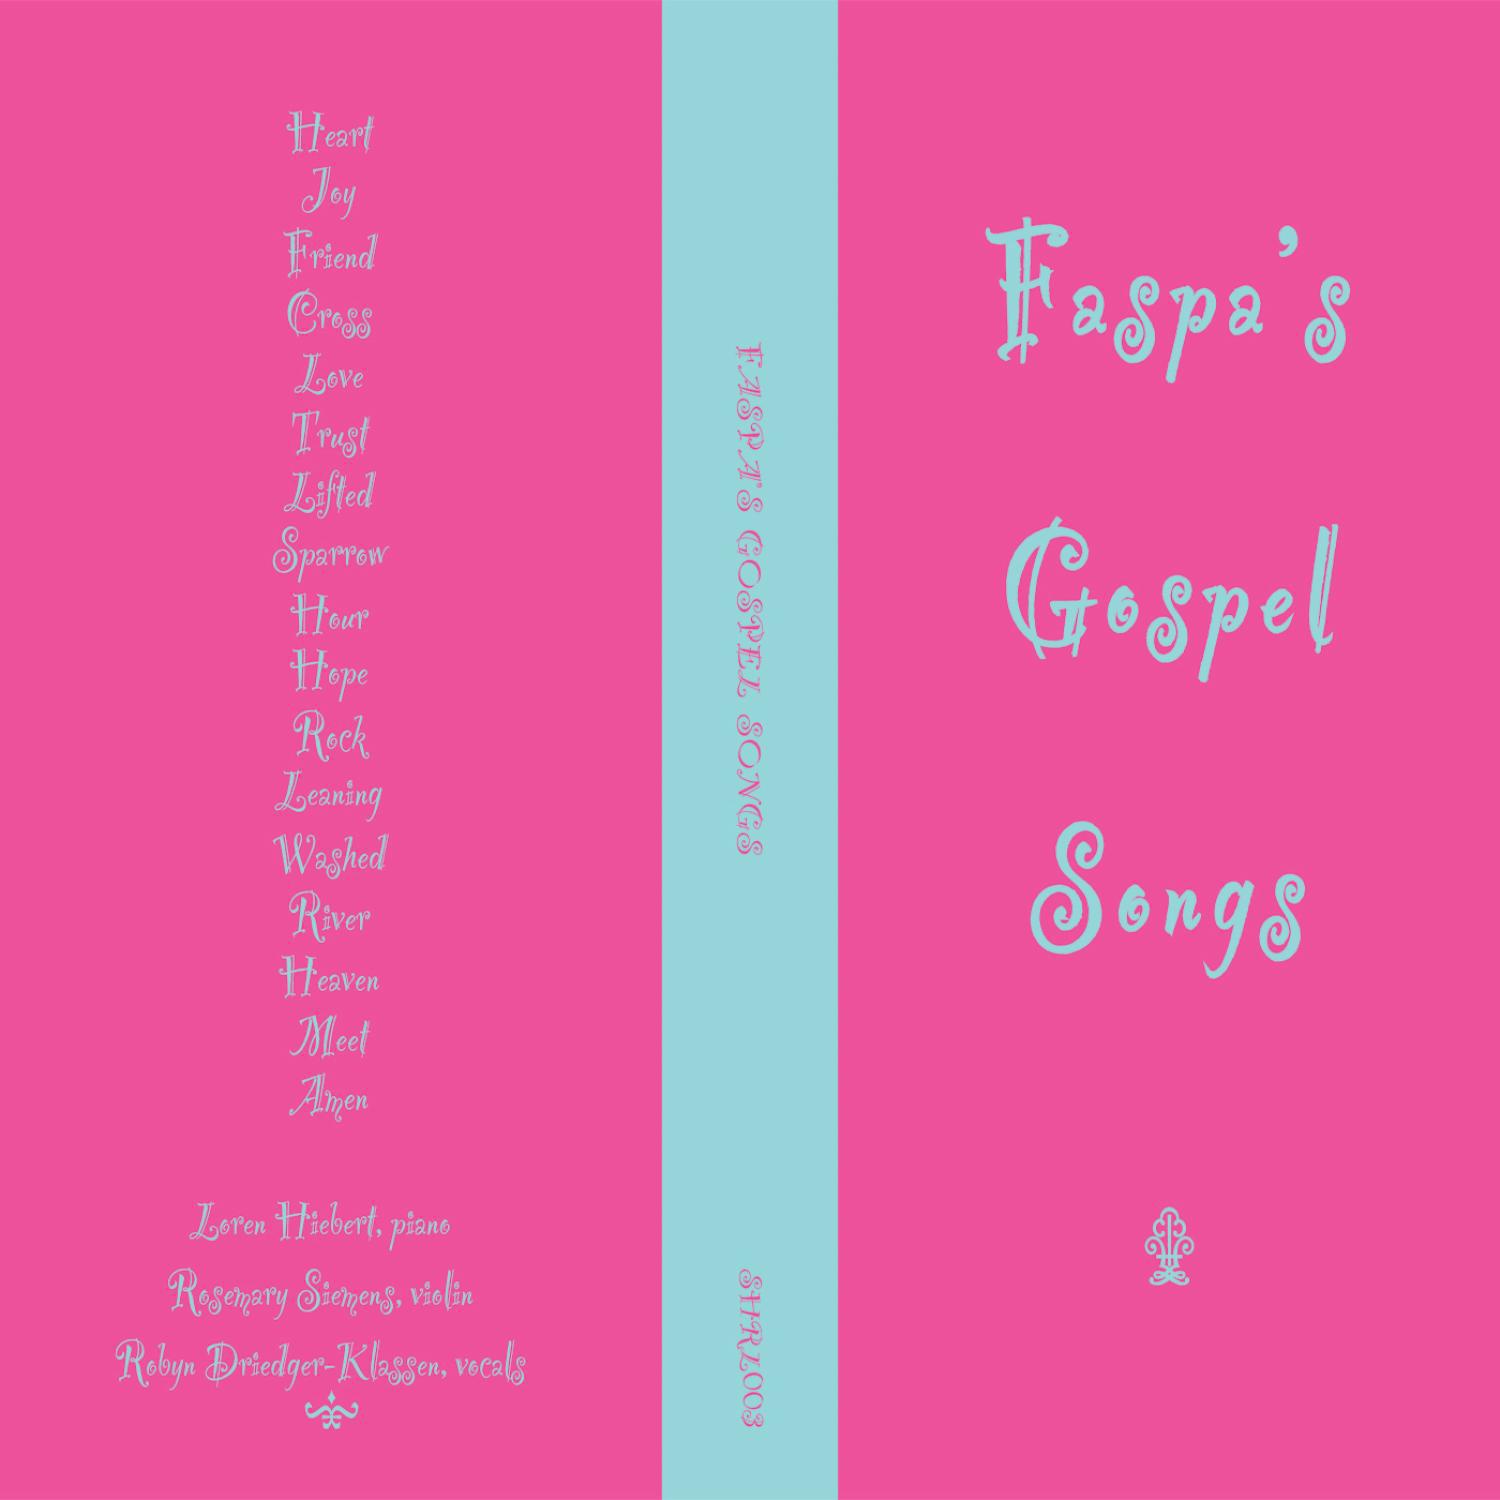 Faspa - The Old Rugged Cross (feat. Robyn Driedger-Klassen, Rosemary Siemens, Loren Hiebert)